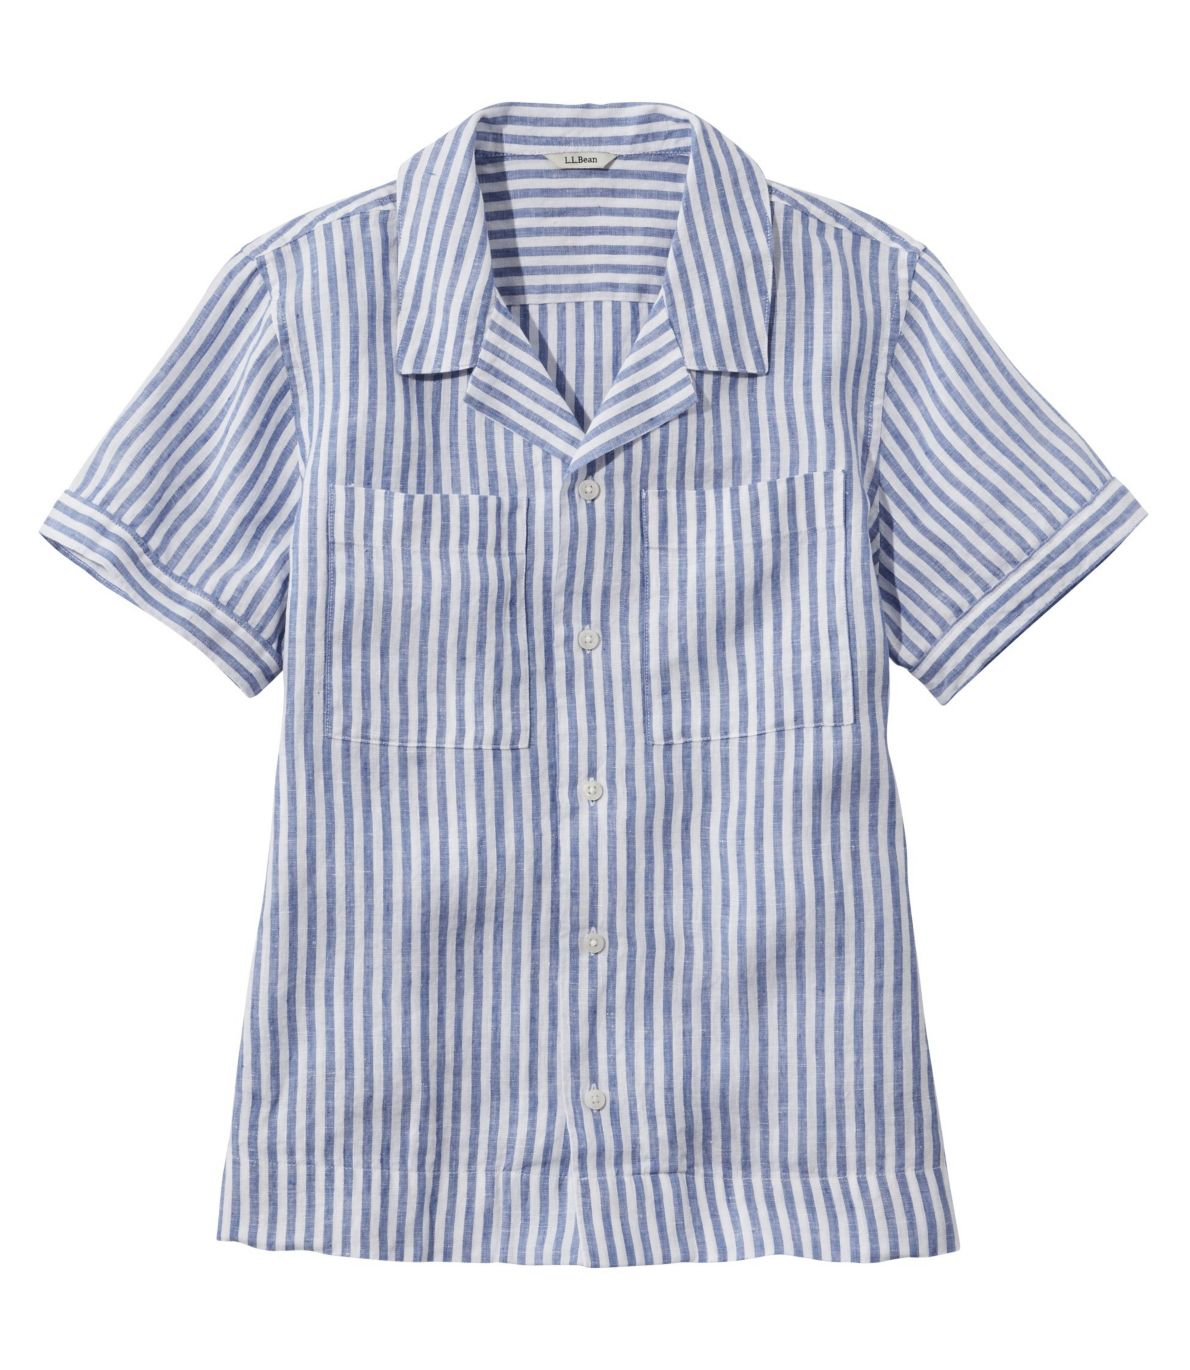 Women's Premium Washable Linen Camp Shirt, Short-Sleeve Stripe